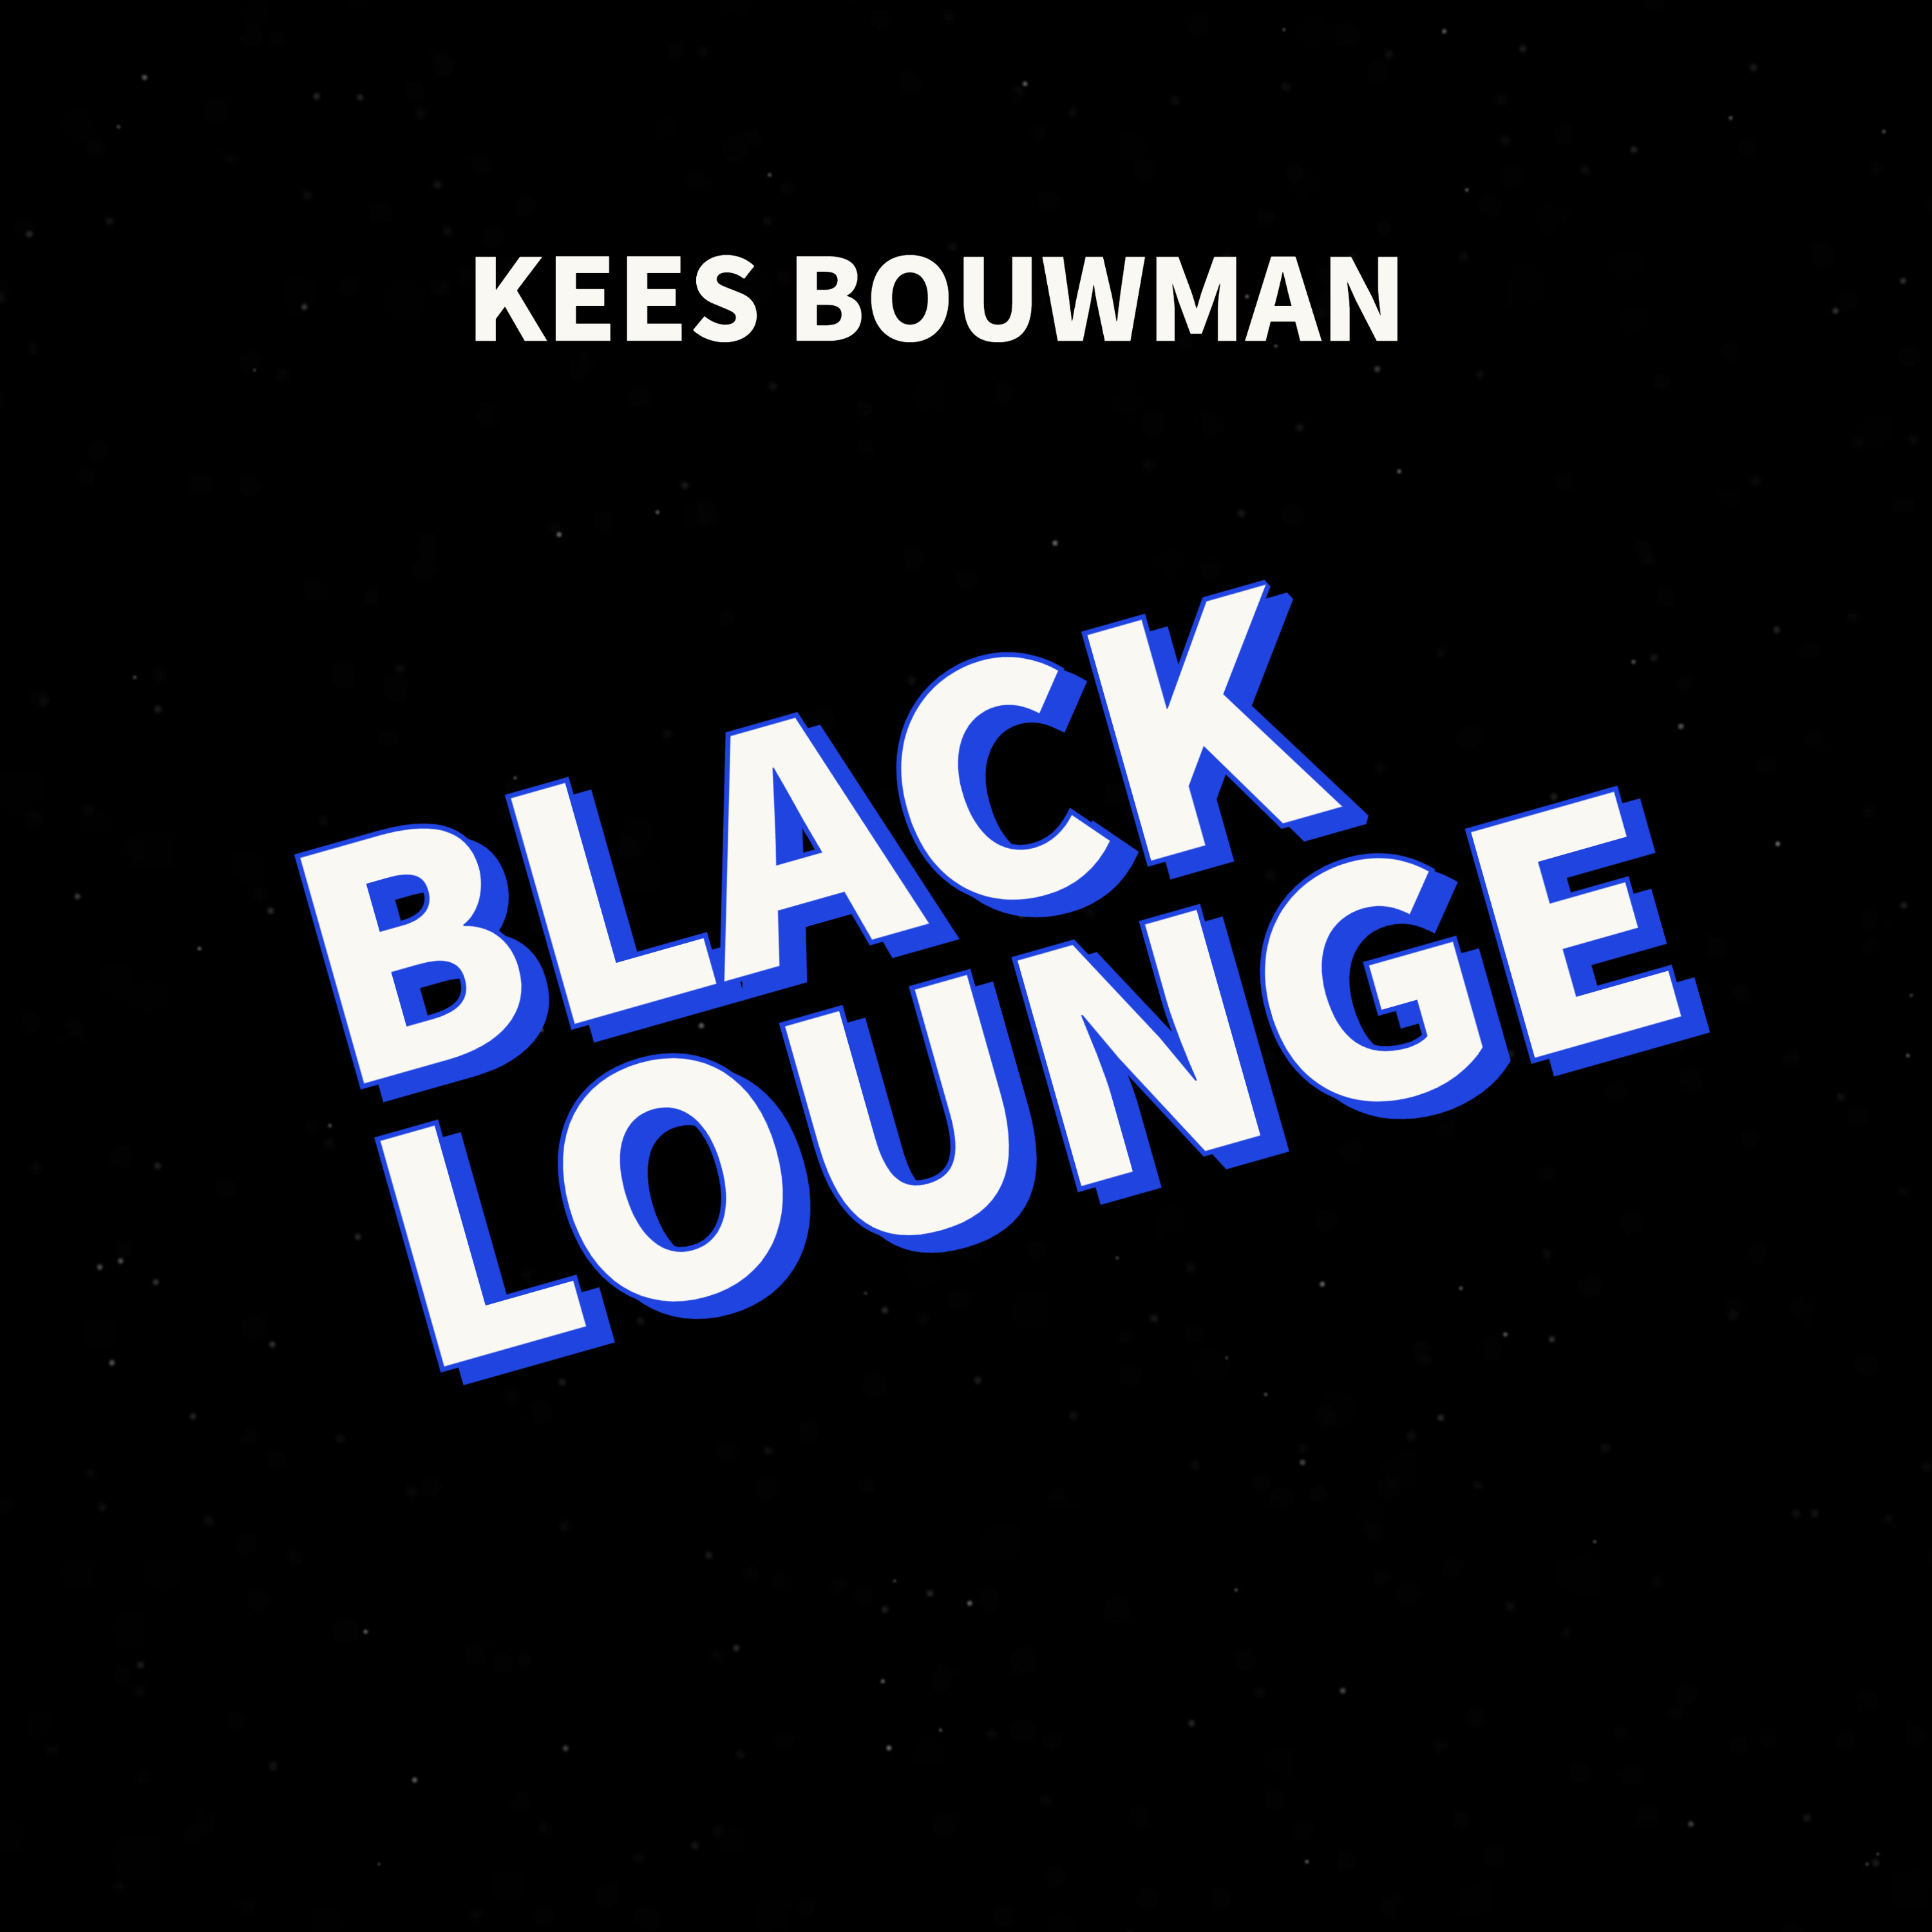 Black lounge